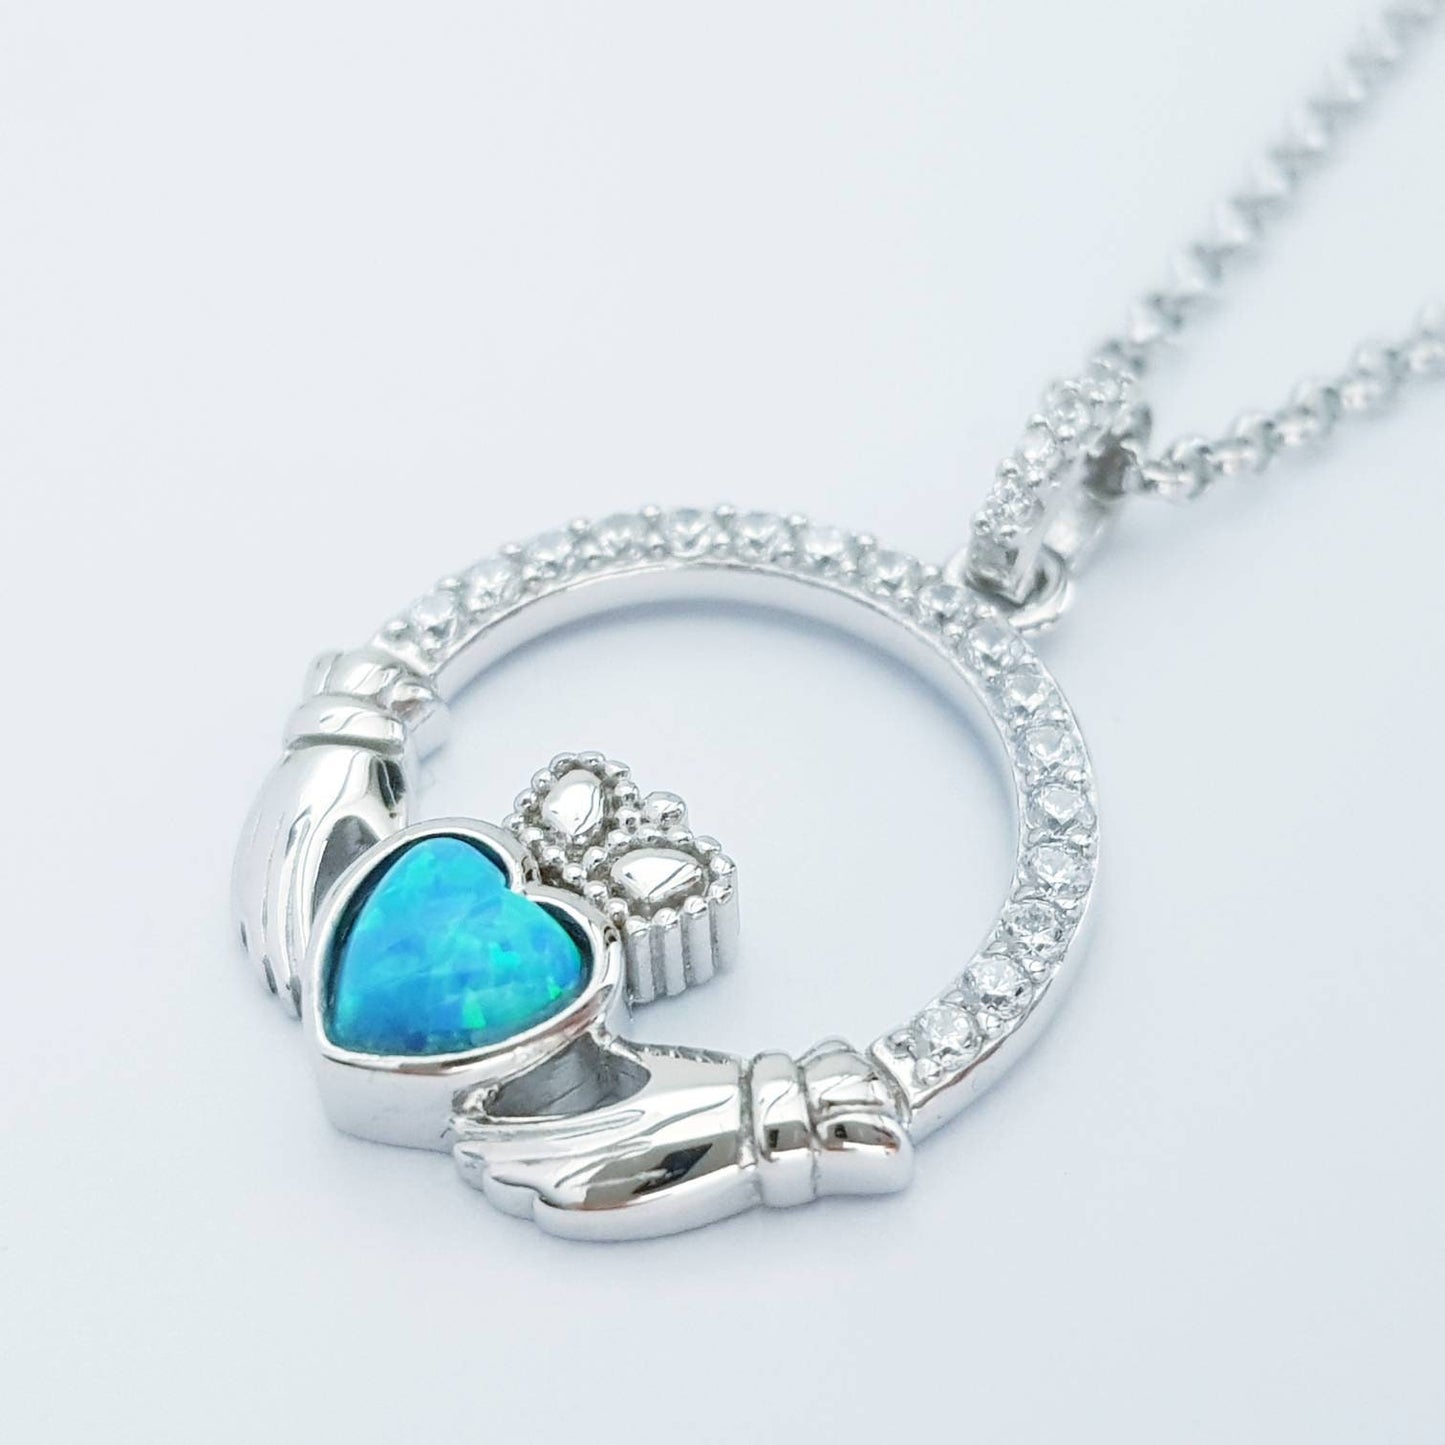 Opal Claddagh pendant, claddagh necklace, sterling silver claddagh pendant